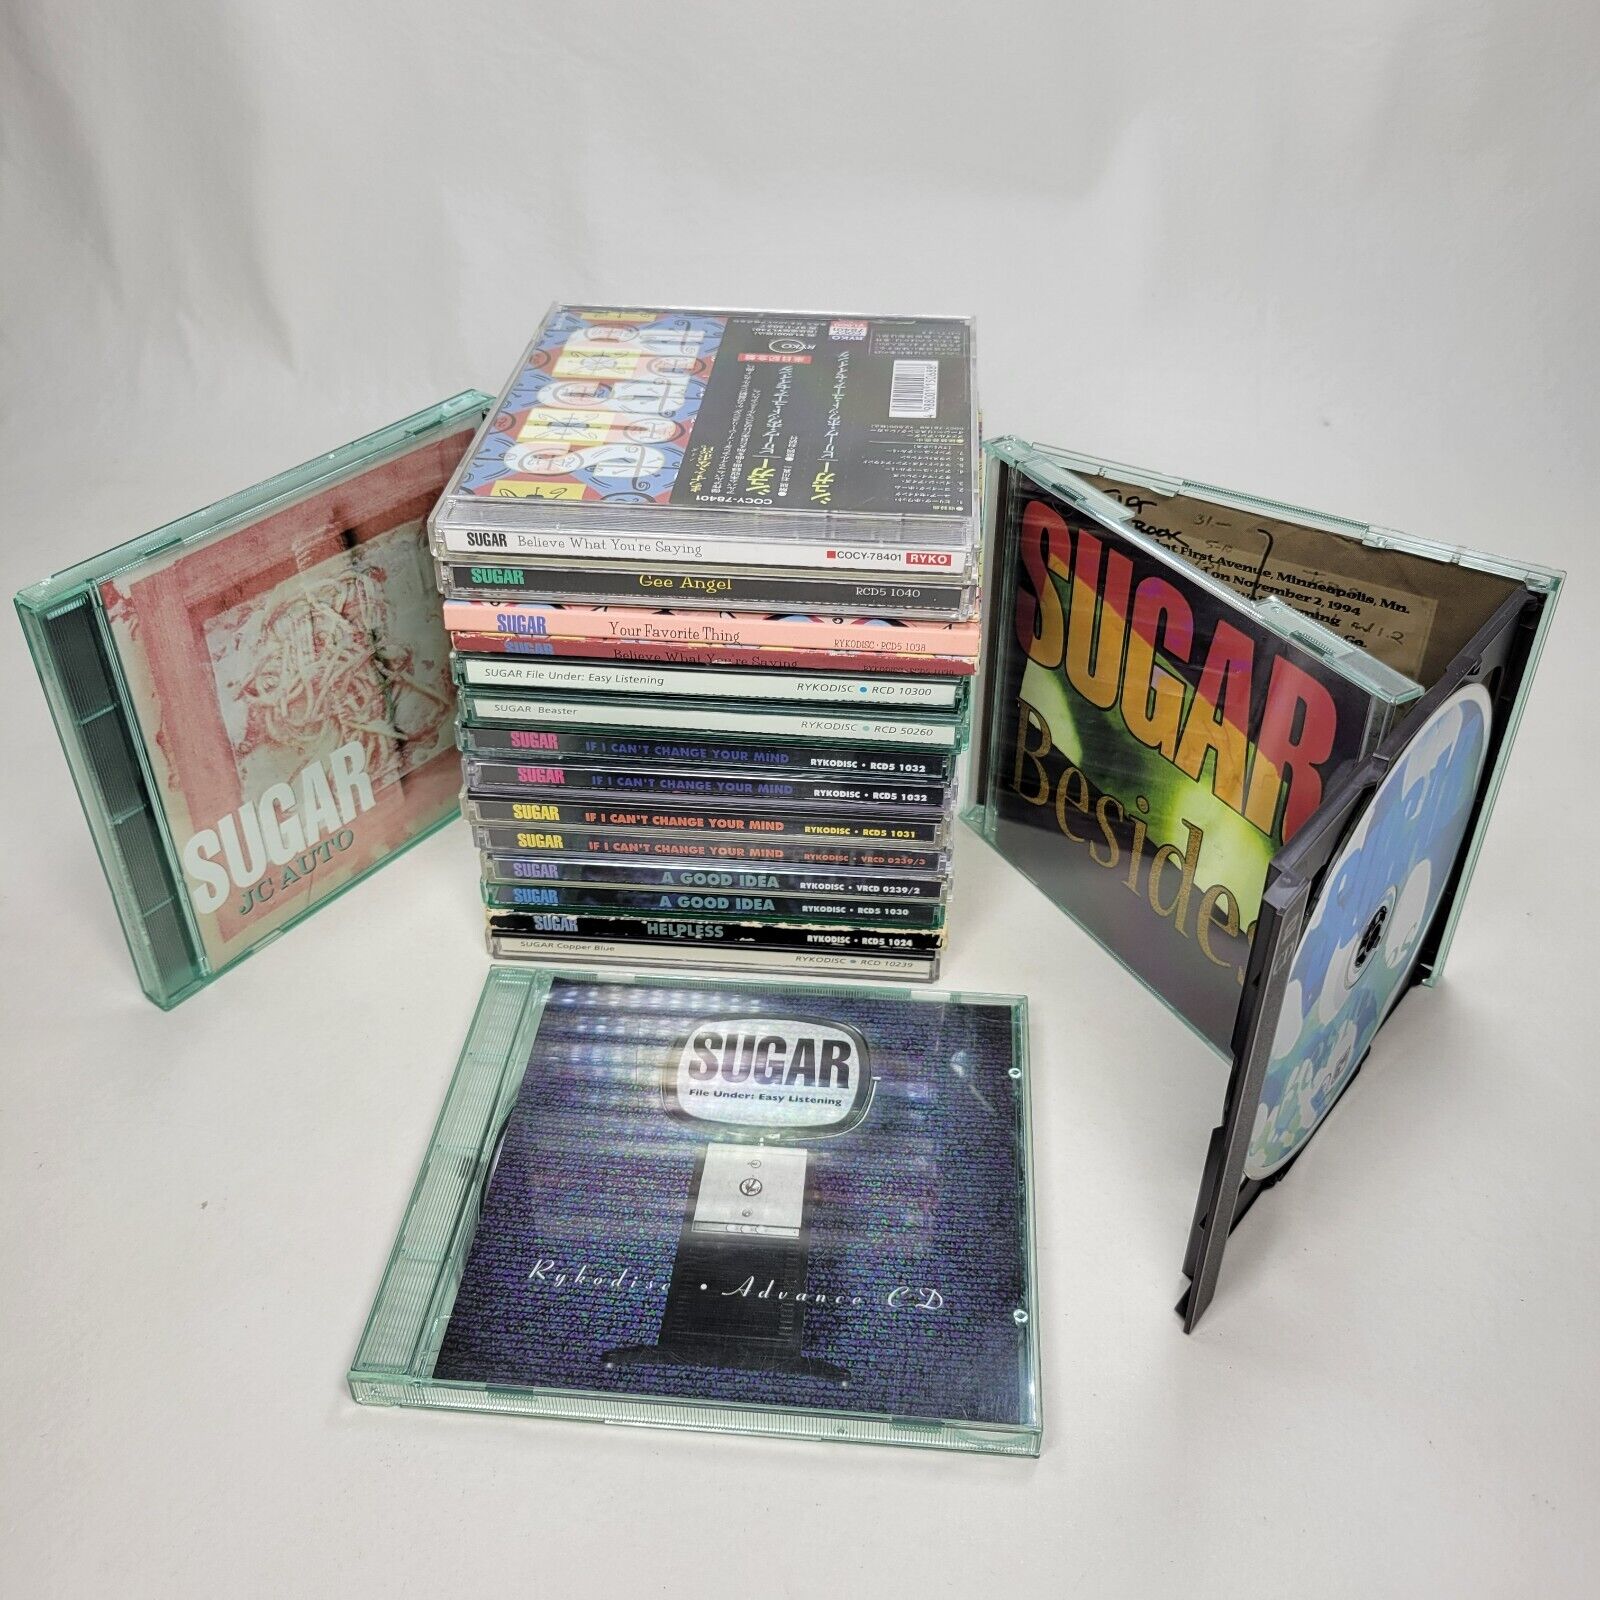 SUGAR Lot of 18 CDs -RARE Besides(2-Disc), FUEL Advance Promo, Many Singles, BMG